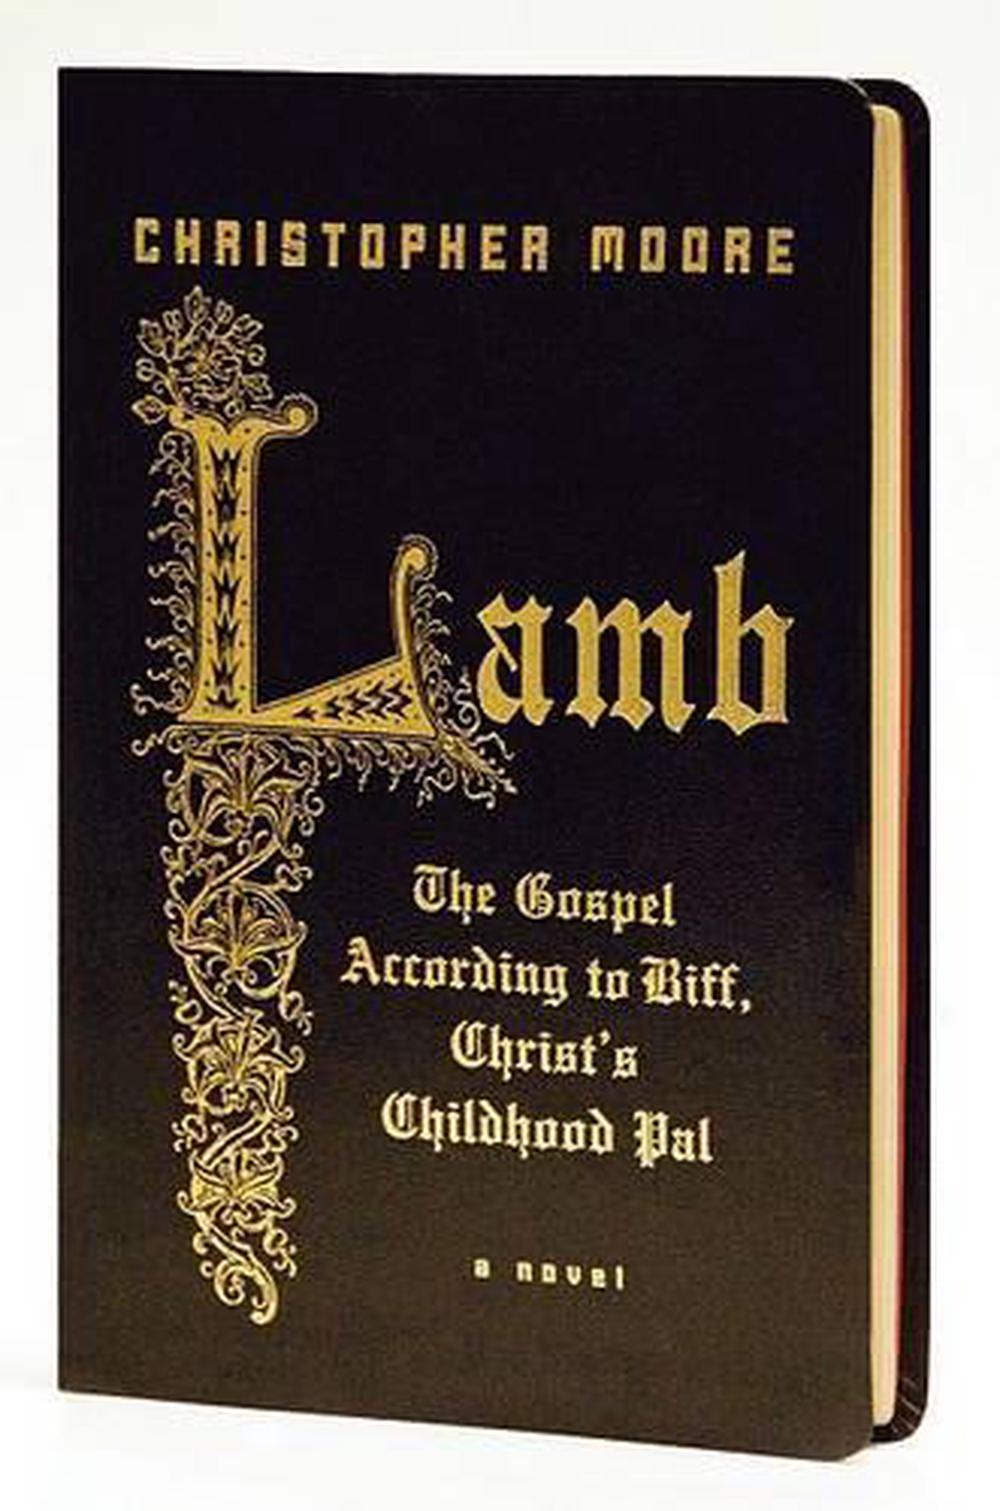 lamb biff christopher moore